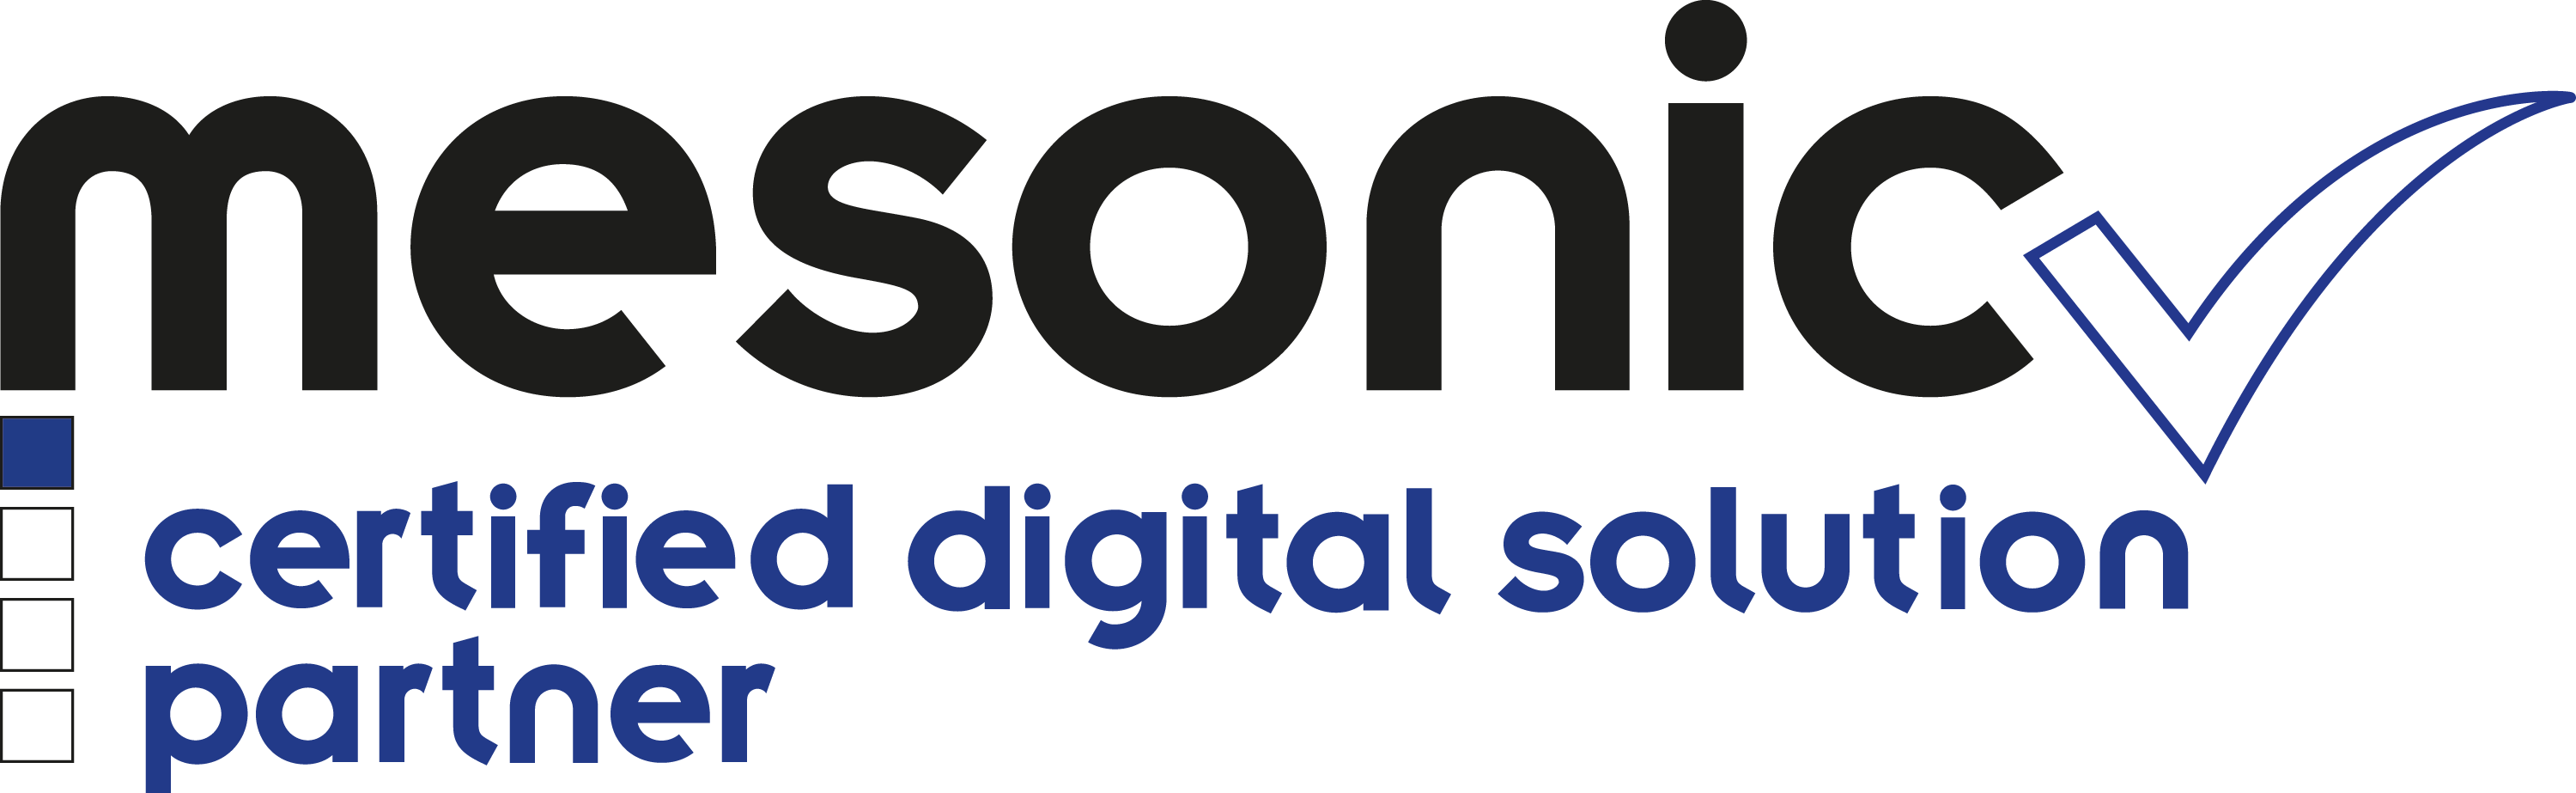 mesonic certified digital solution partner